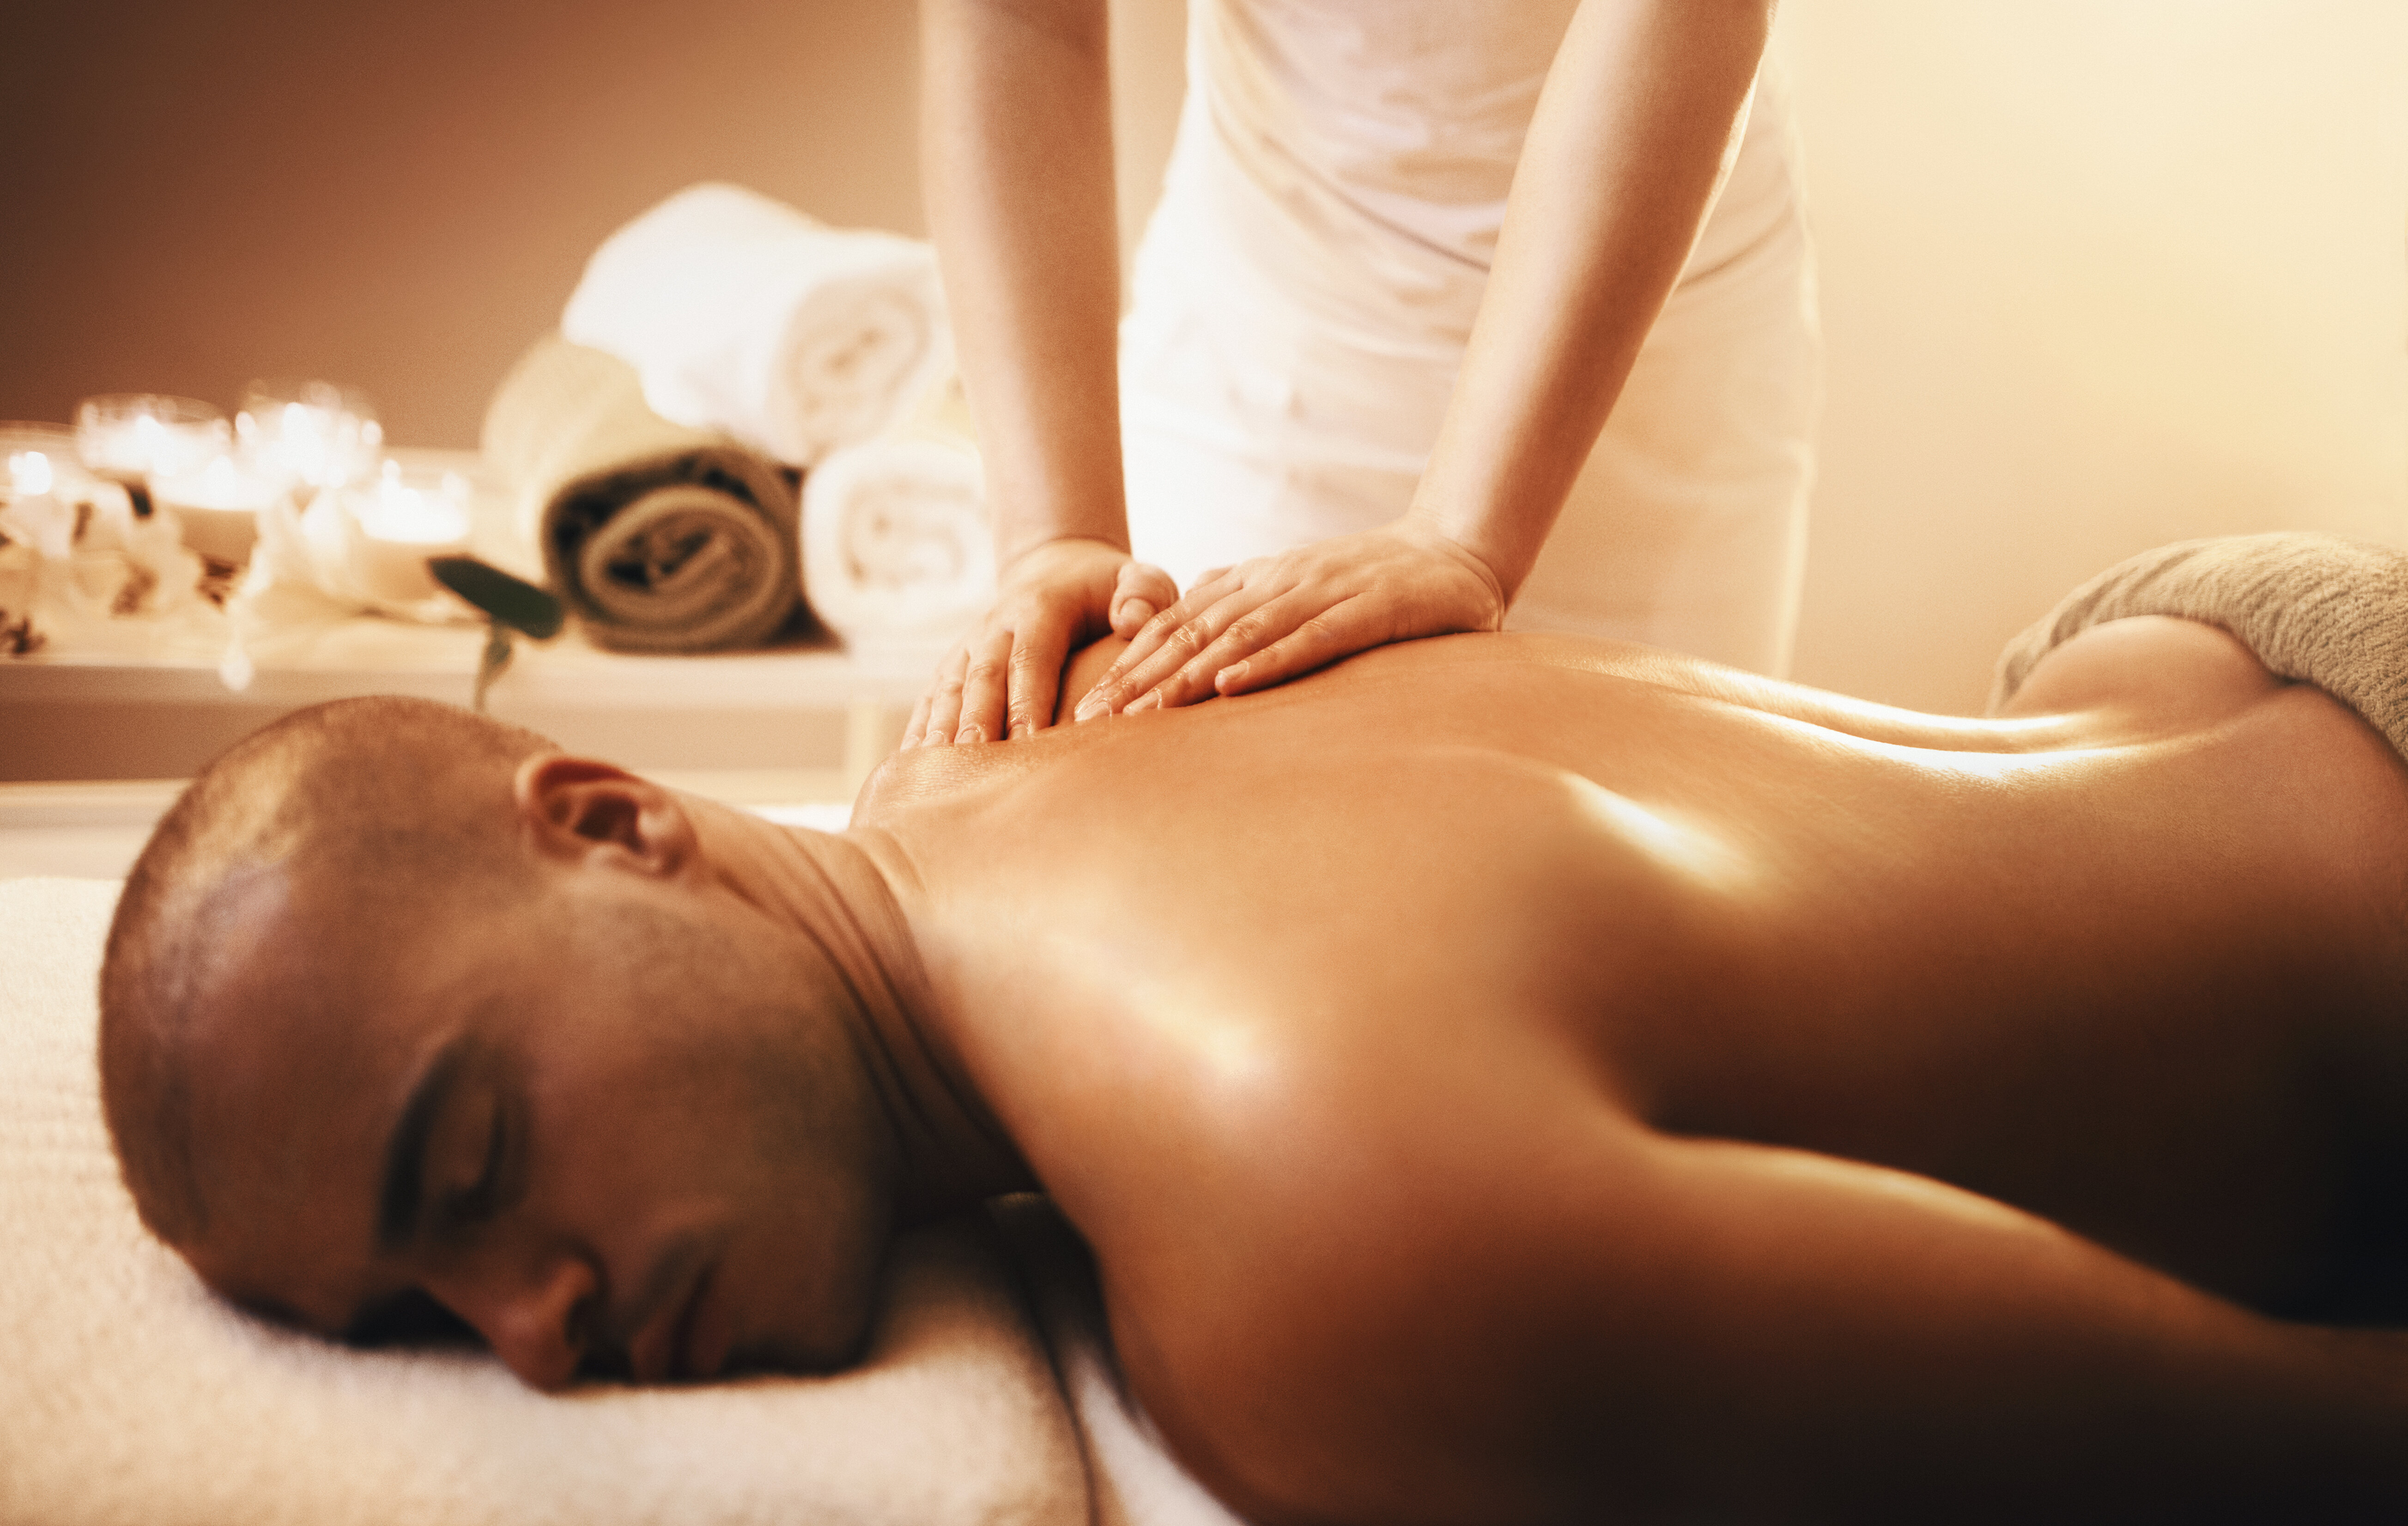 Hot body massage. Массаж релаксирующий для мужчин. Спа массаж для мужчин. Релакс массаж для мужчин. Массаж картинки.